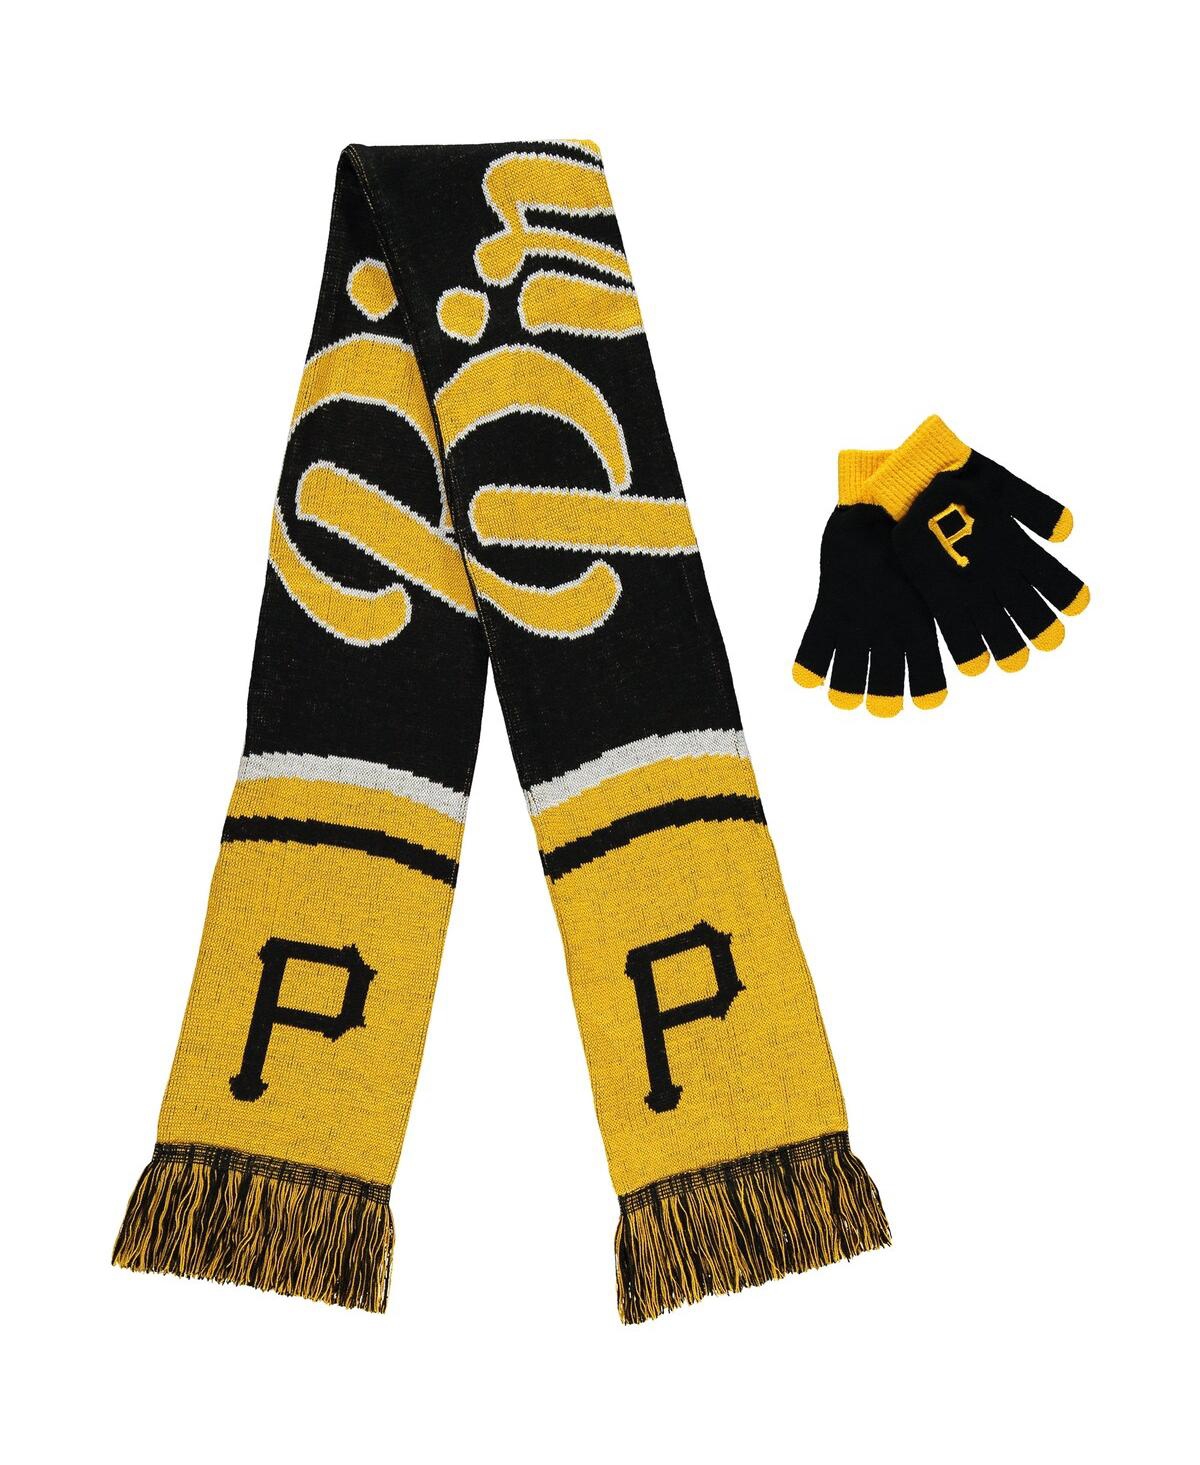 Women's Pittsburgh Pirates Glove and Scarf Set - Yellow, Black